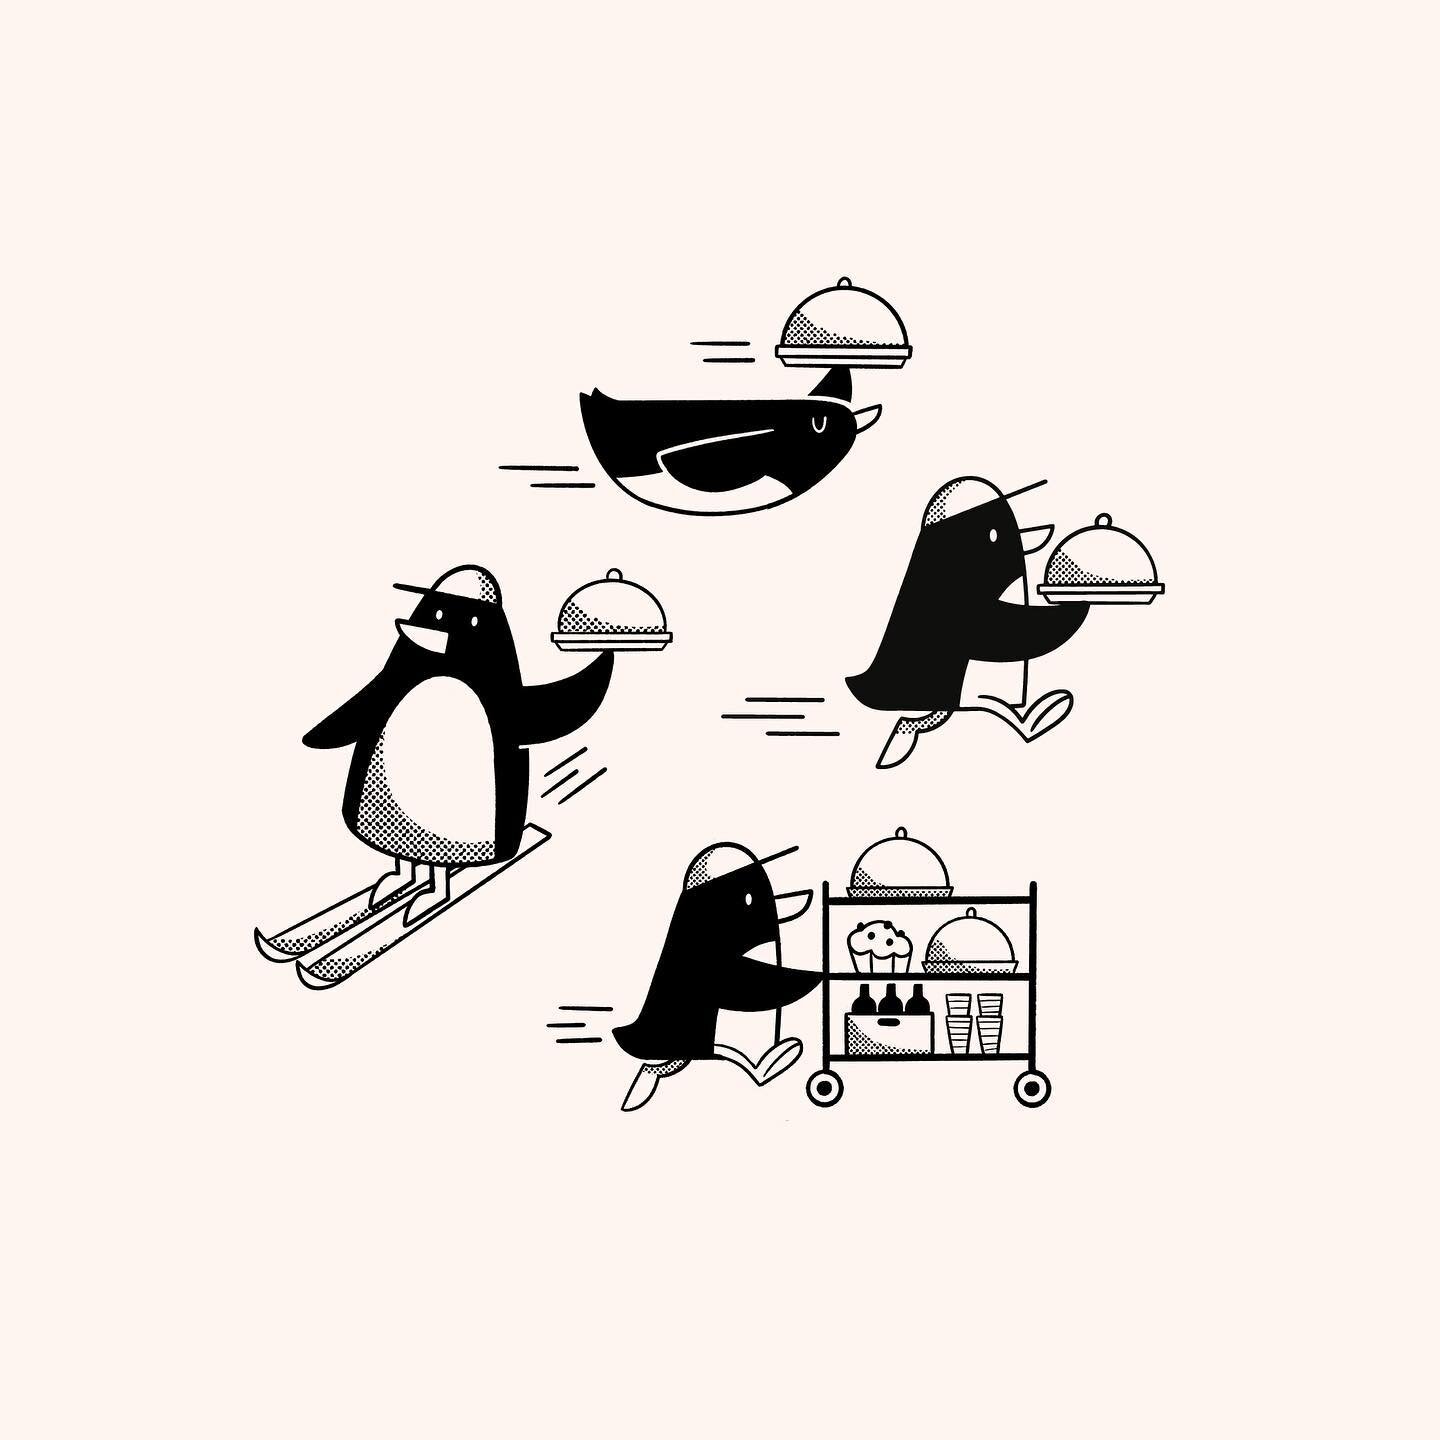 Ici 4 furtifs et fugaces pingouins ⛷

#logodesigner #icondesign #chartegraphique #identitevisuelle #graphistefreelance #illustratrice #illustrationenfant #childrenillustration #brandingdesign #brandillustration #visualidentity